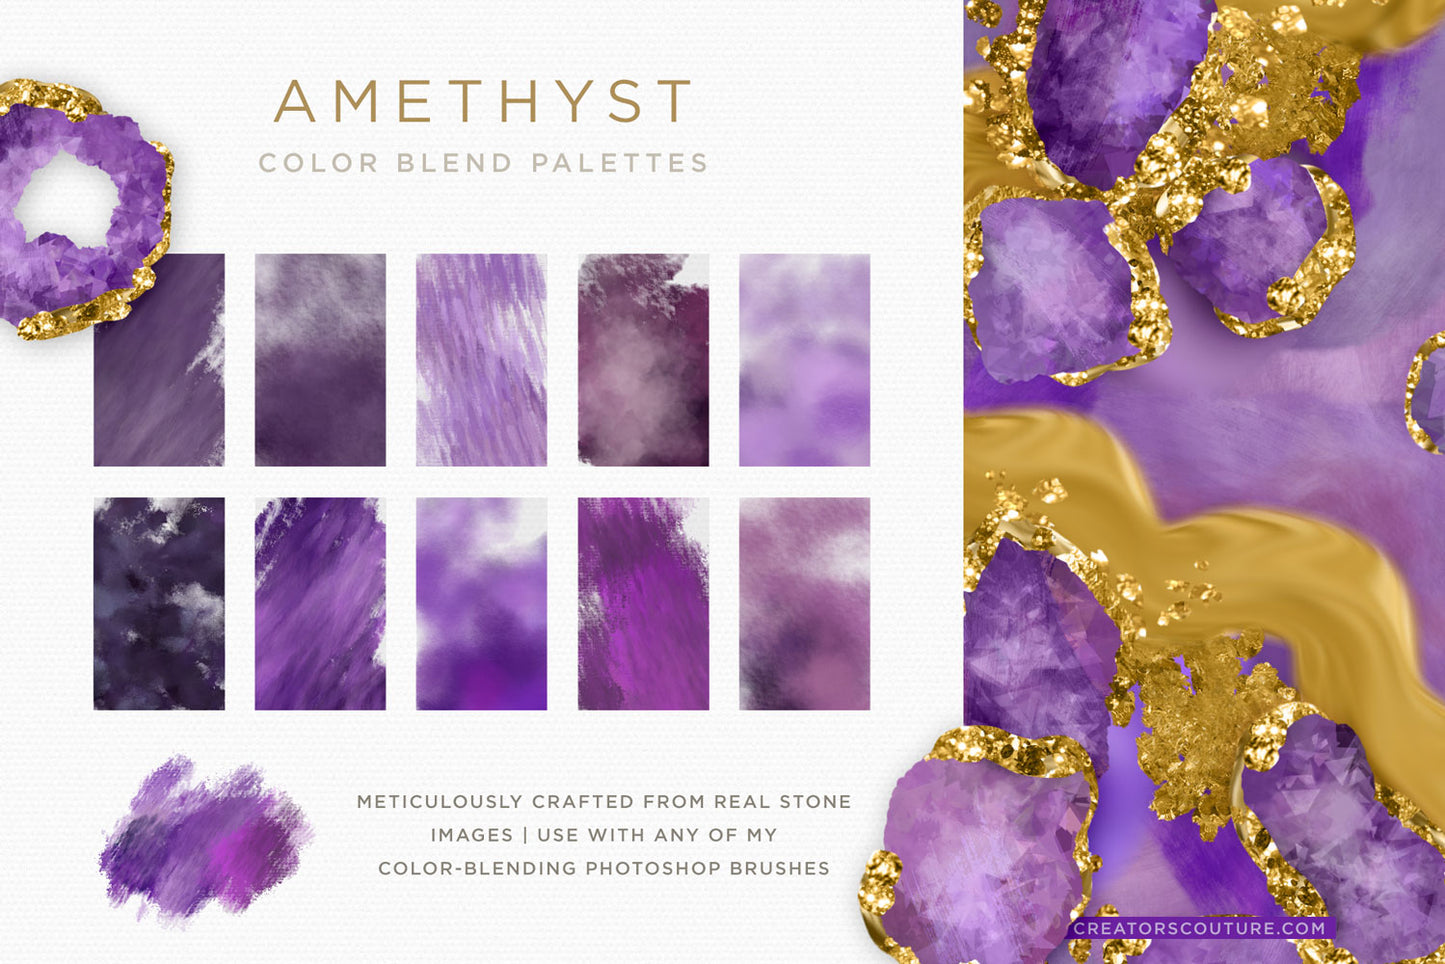 Gem, Crystal, & Birthstone Photoshop Brush Studio & Color Palettes